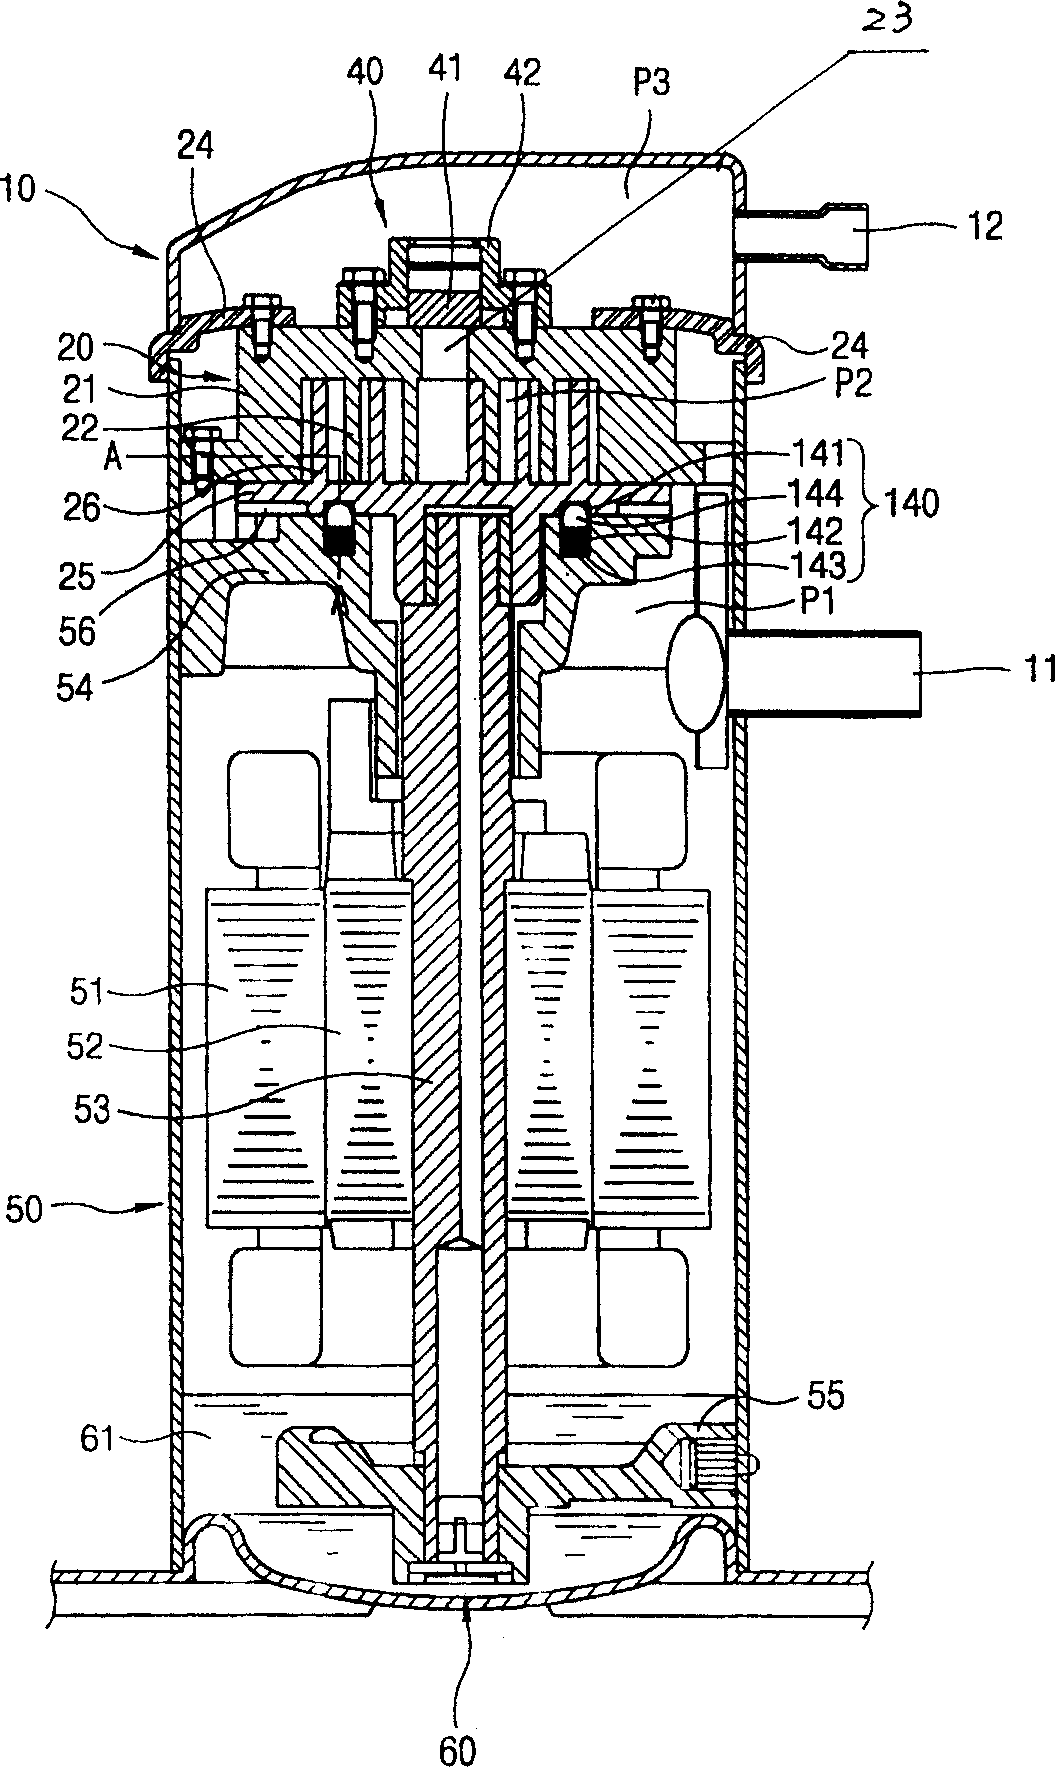 Anti-reverse device of vortex compressor